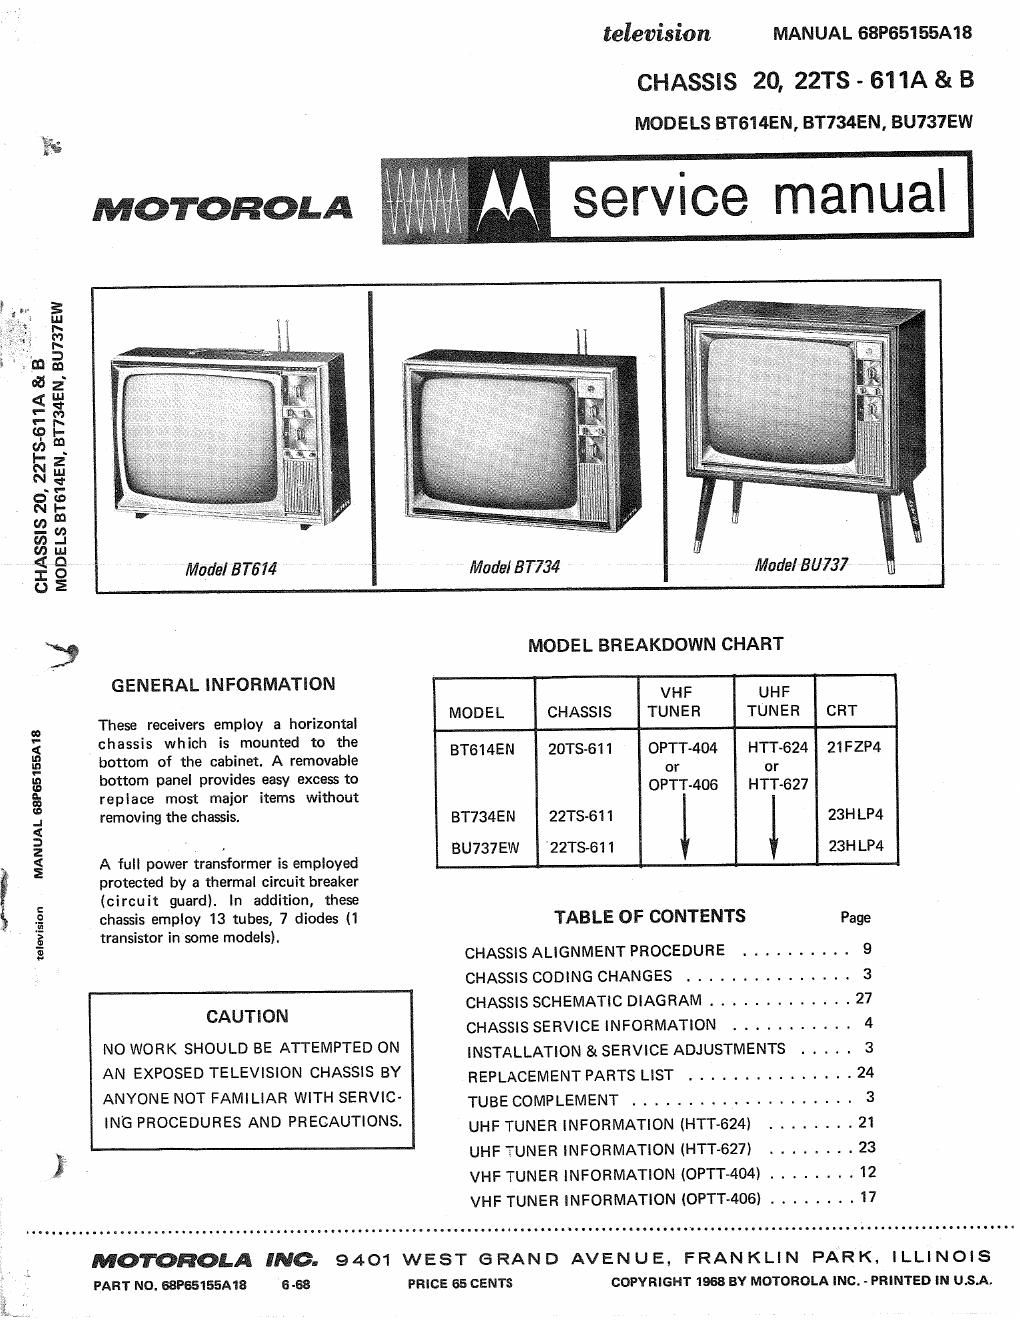 motorola bt 734 en service manual